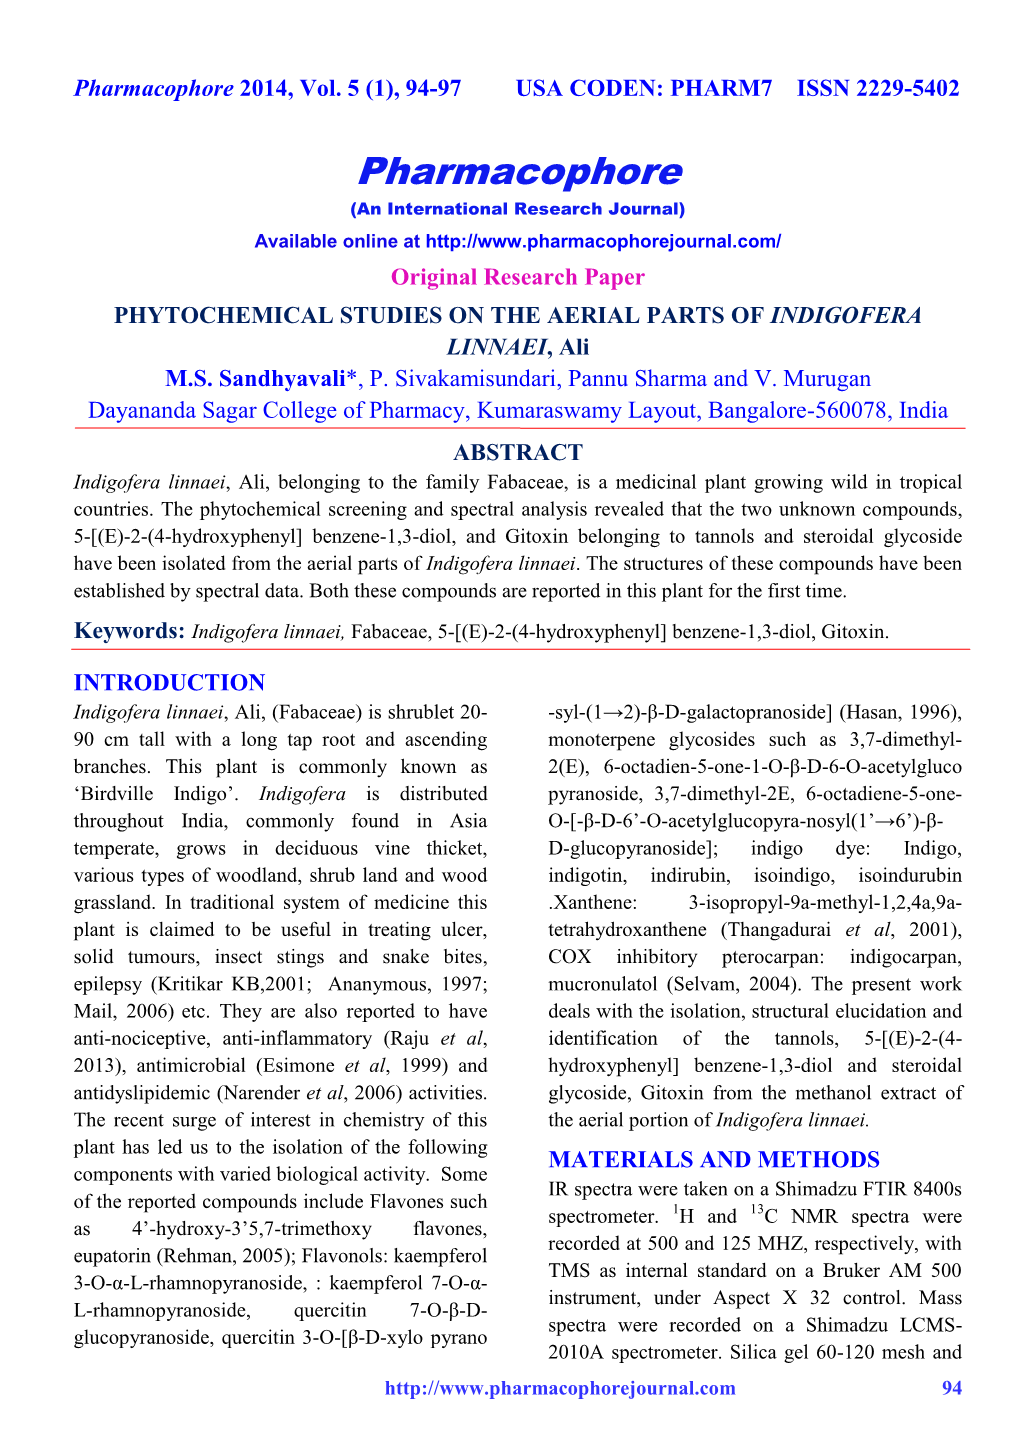 PHYTOCHEMICAL STUDIES on the AERIAL PARTS of INDIGOFERA LINNAEI, Ali M.S